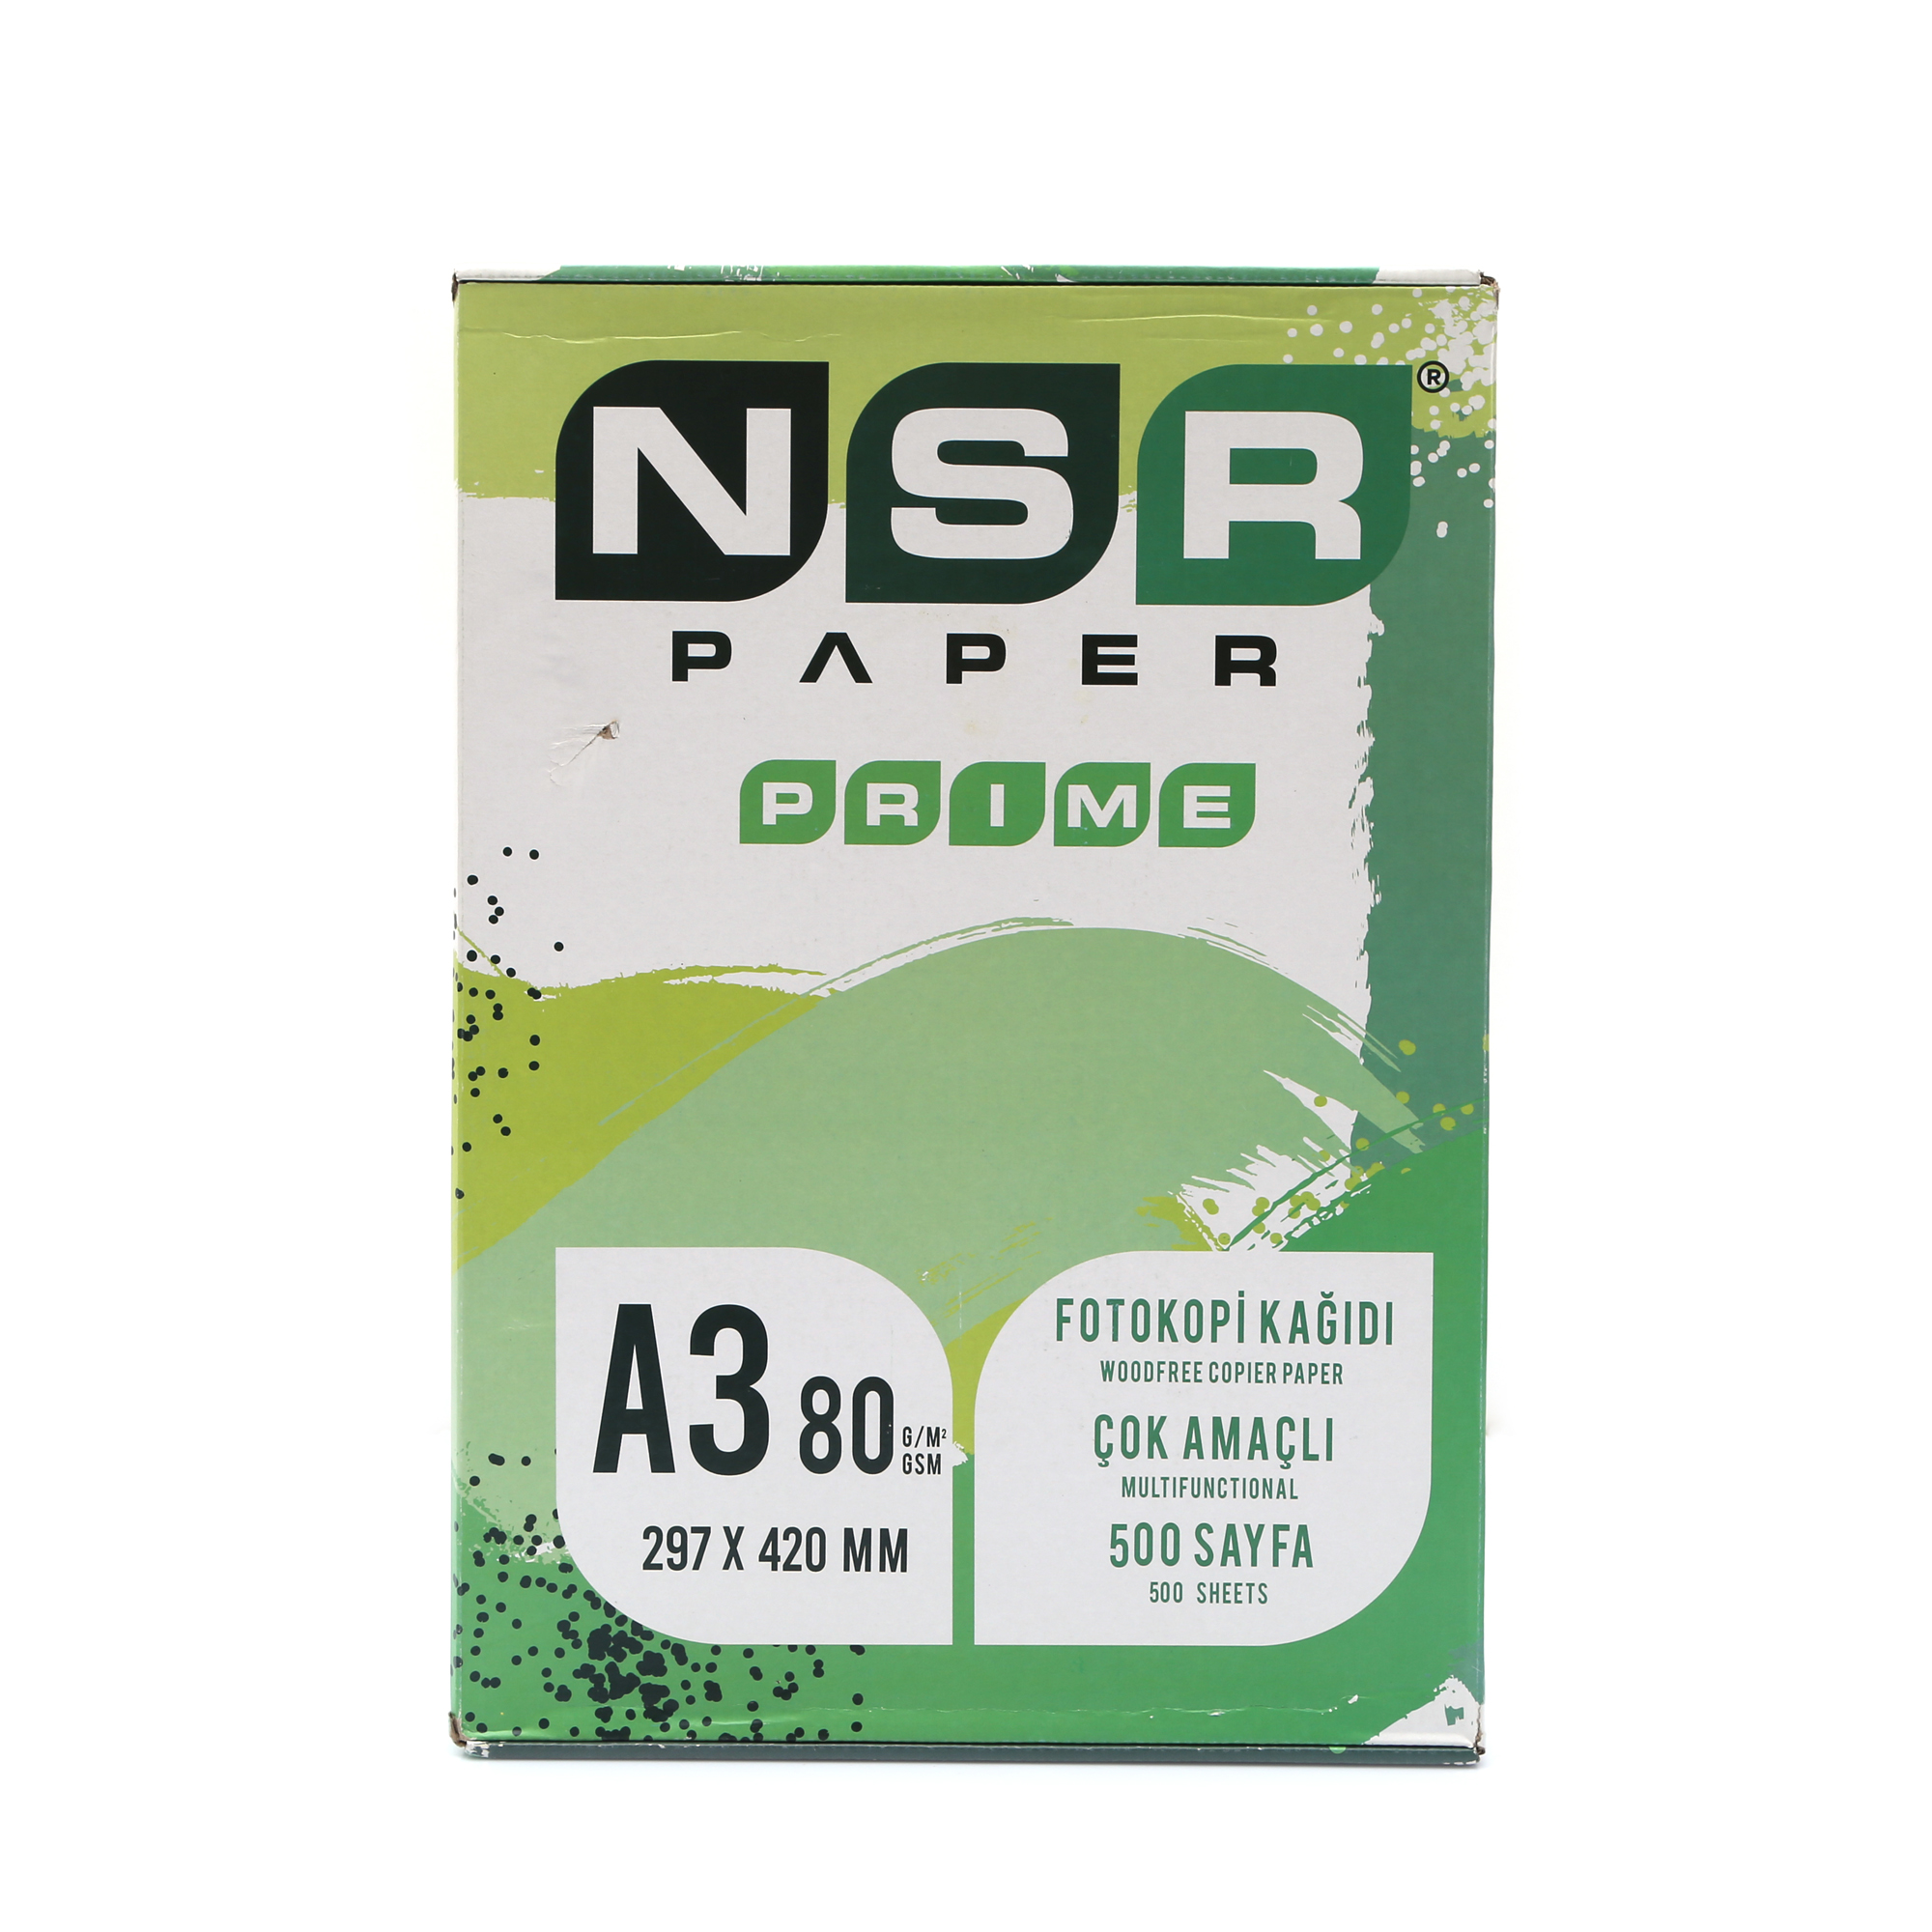 Nsr Paper Prime A3 Fotokopi Kağıdı 80 Gr 500 Sayfa